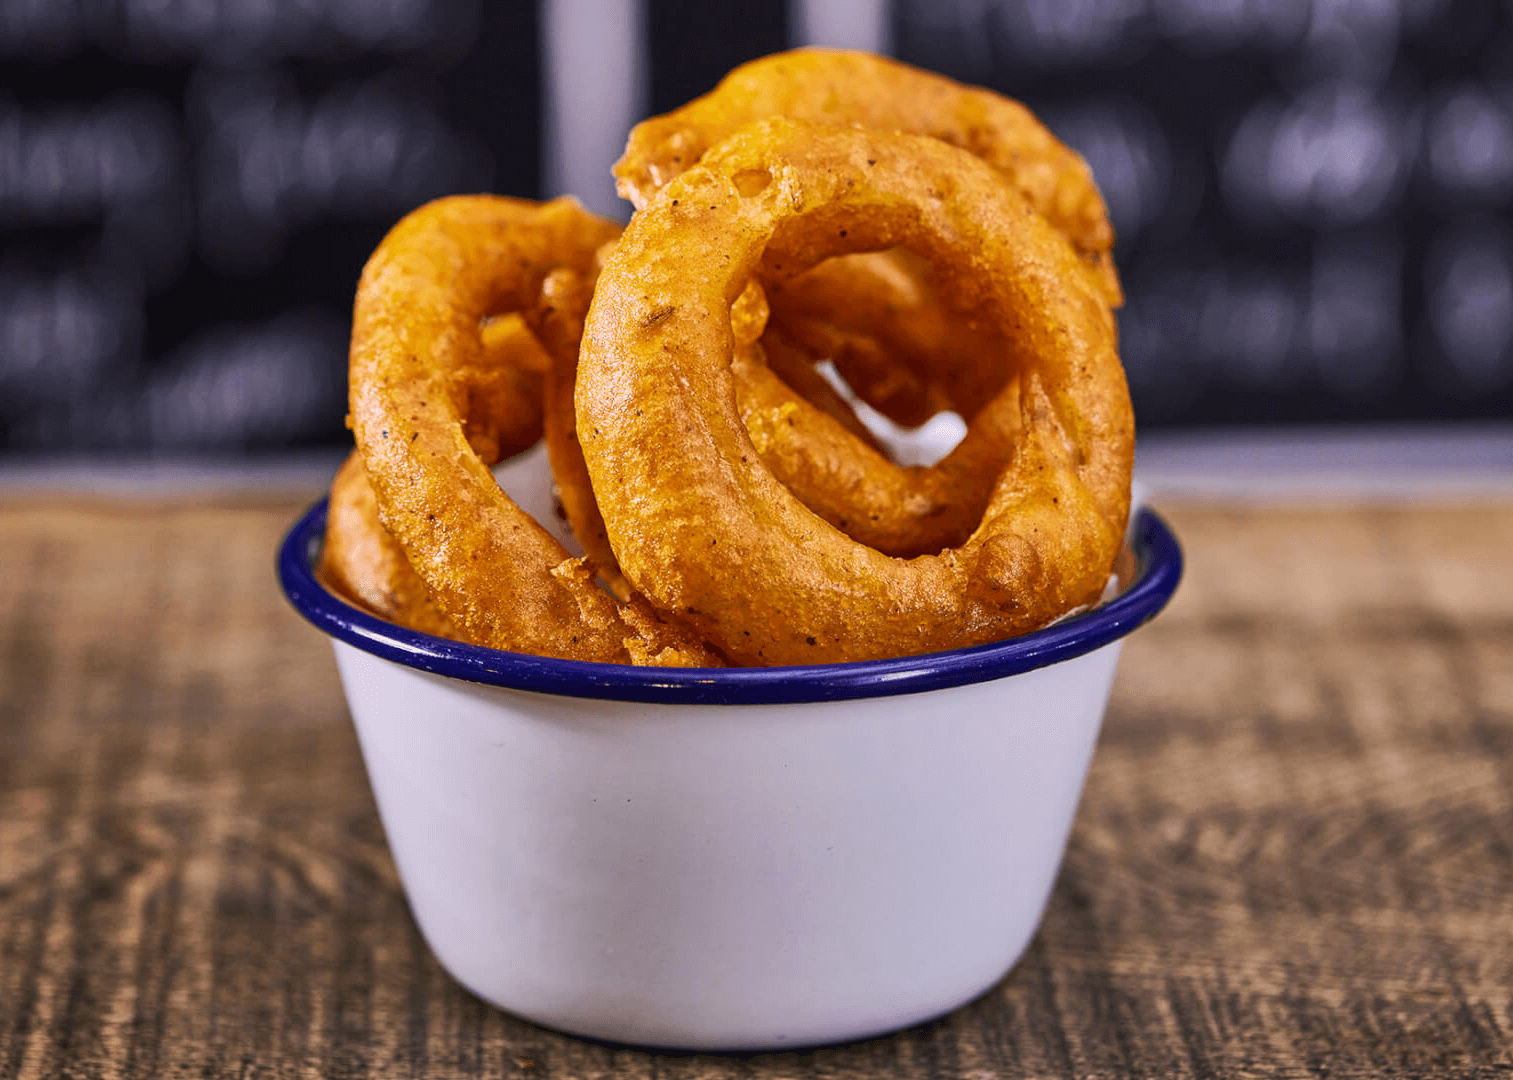 Onion rings at Honest Burgers